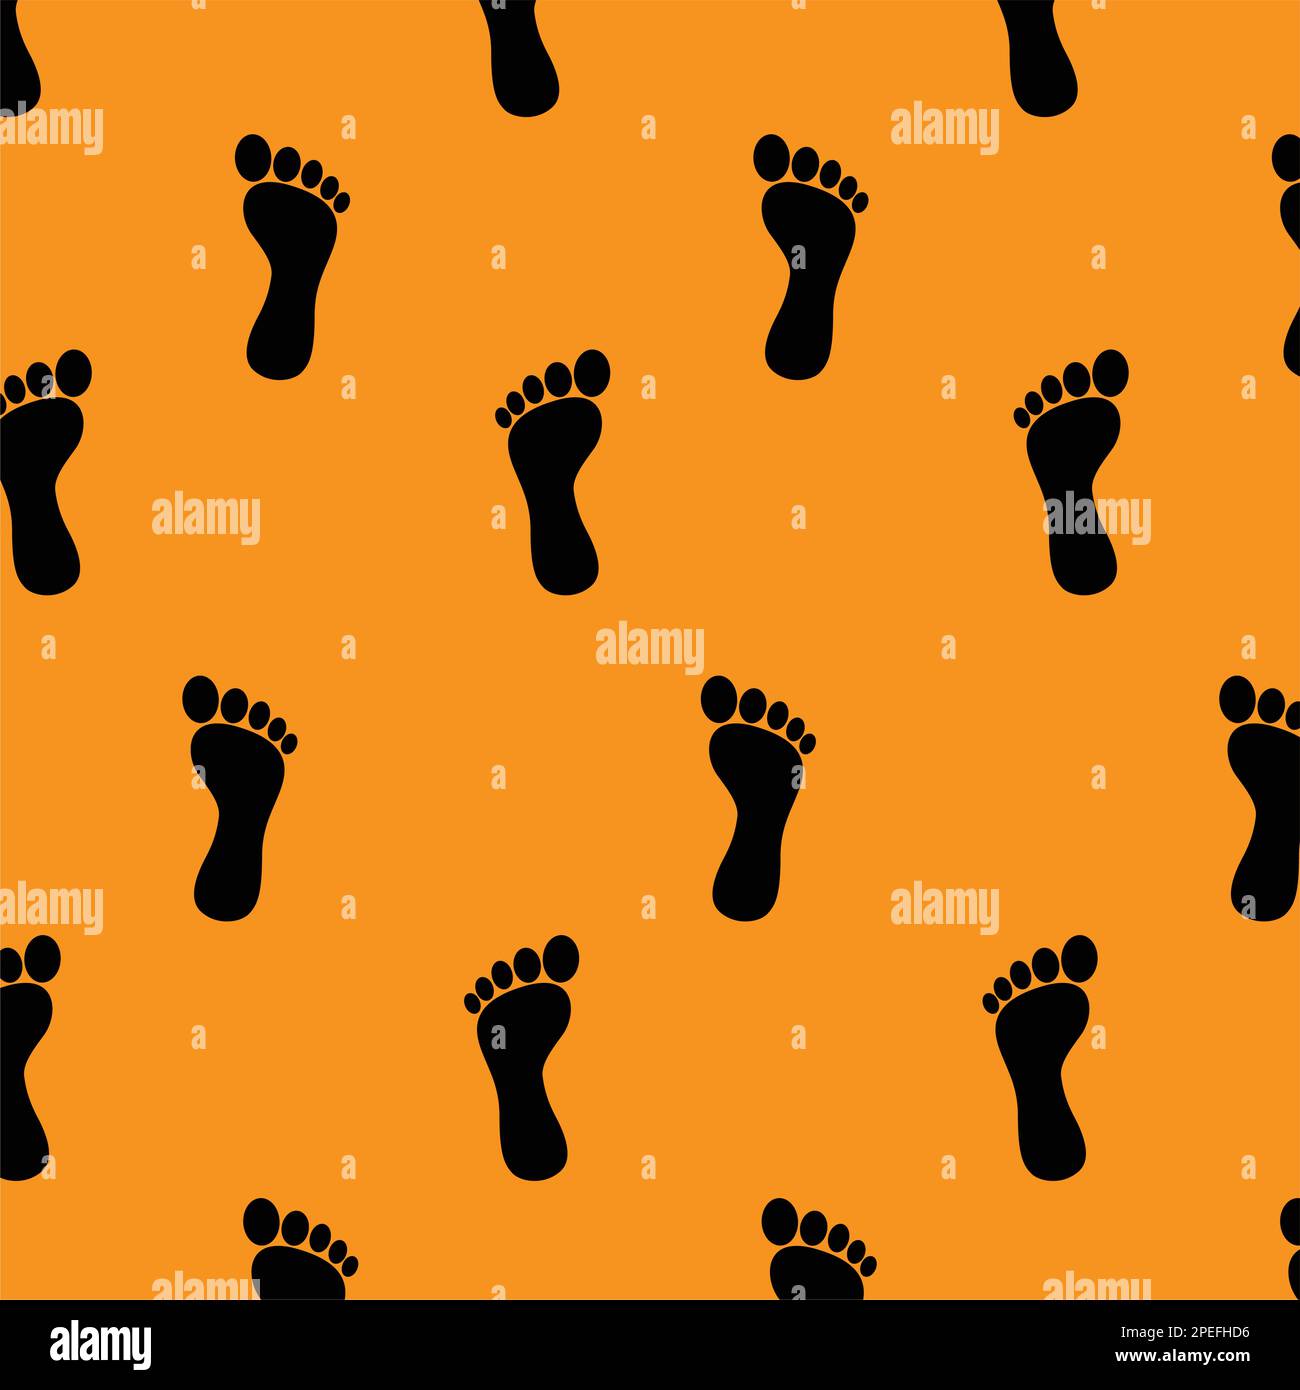 human footprint background vektor illustration Stock Vector